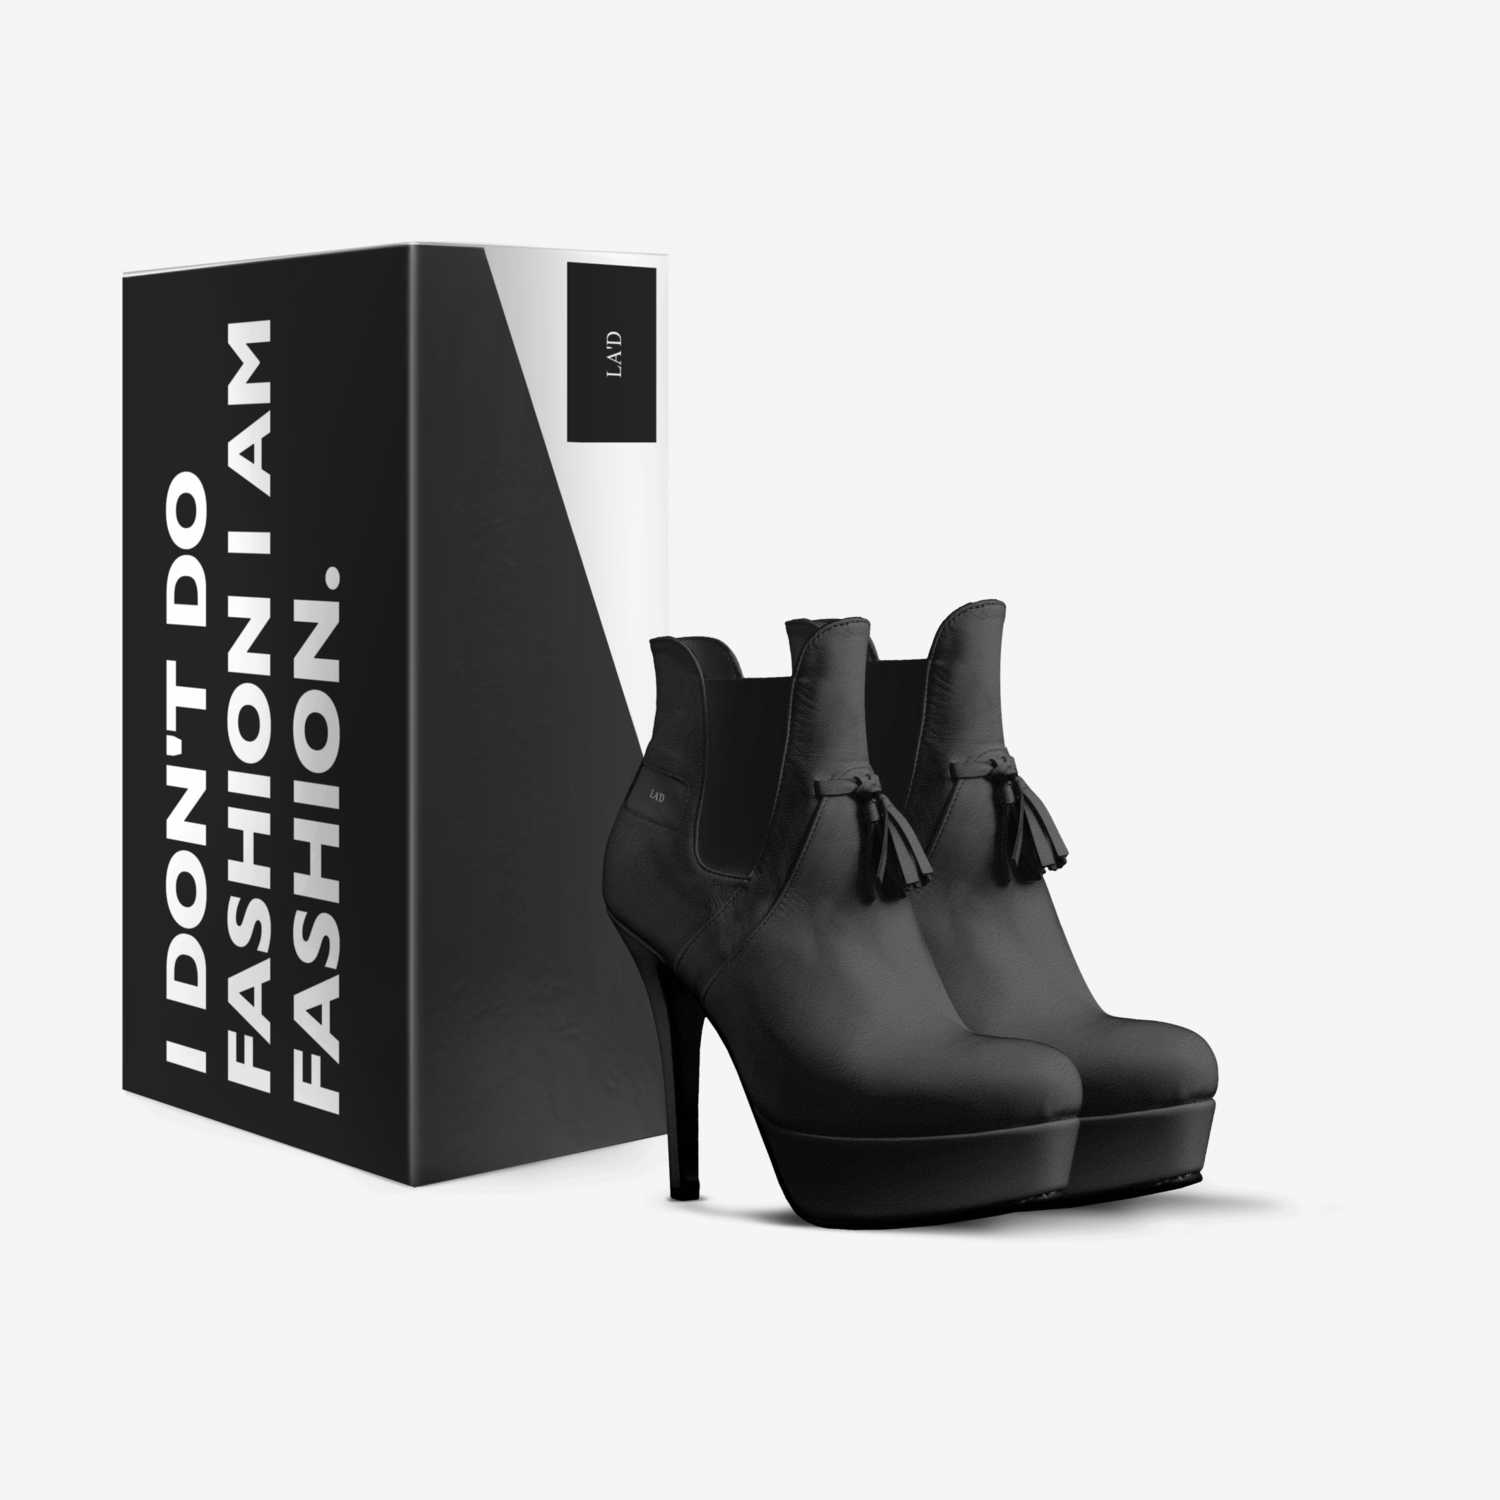 LA'D custom made in Italy shoes by Benjamin Reid | Box view